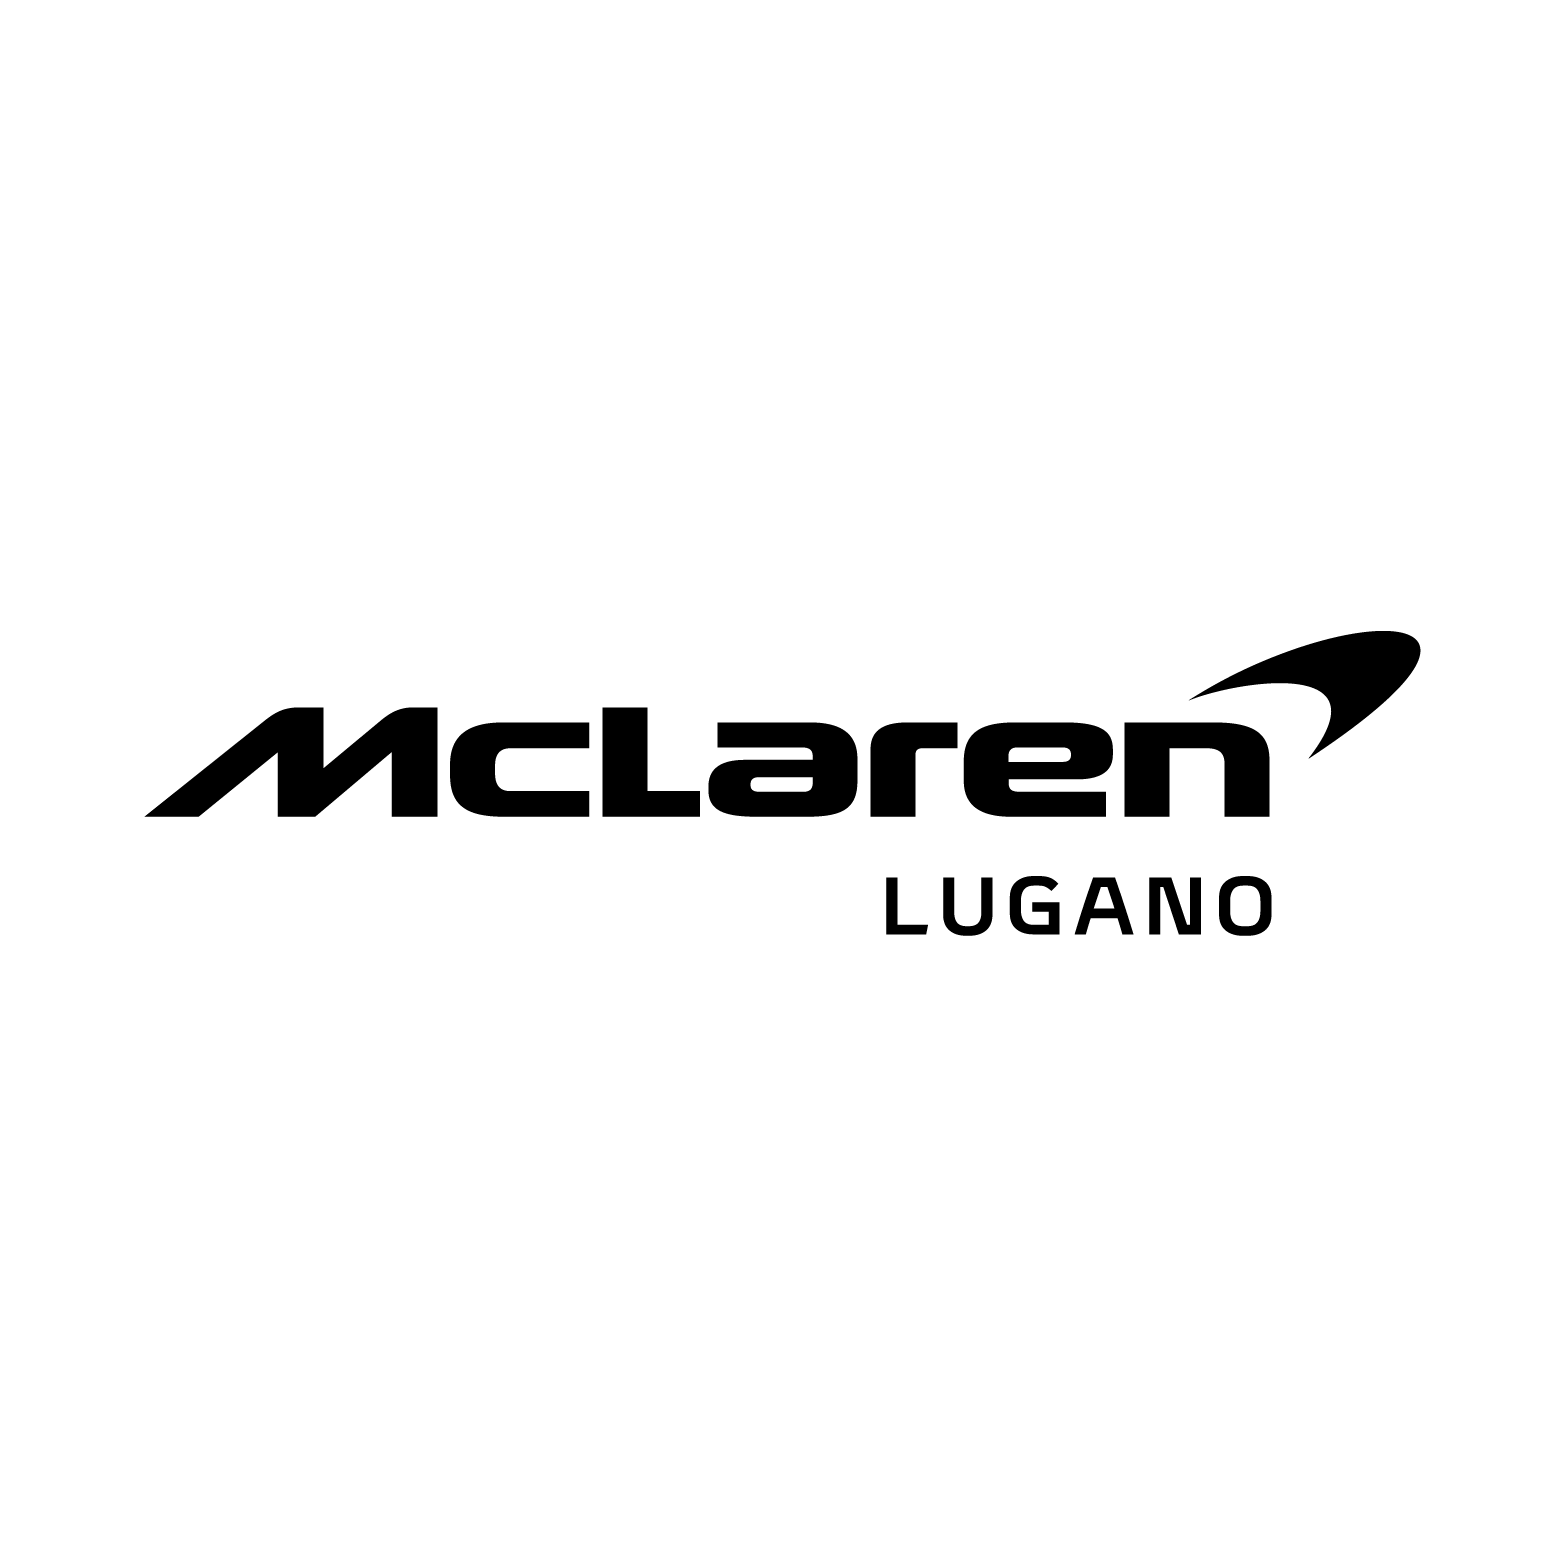 McLaren Lugano - Aston Martin Cadenazzo Logo